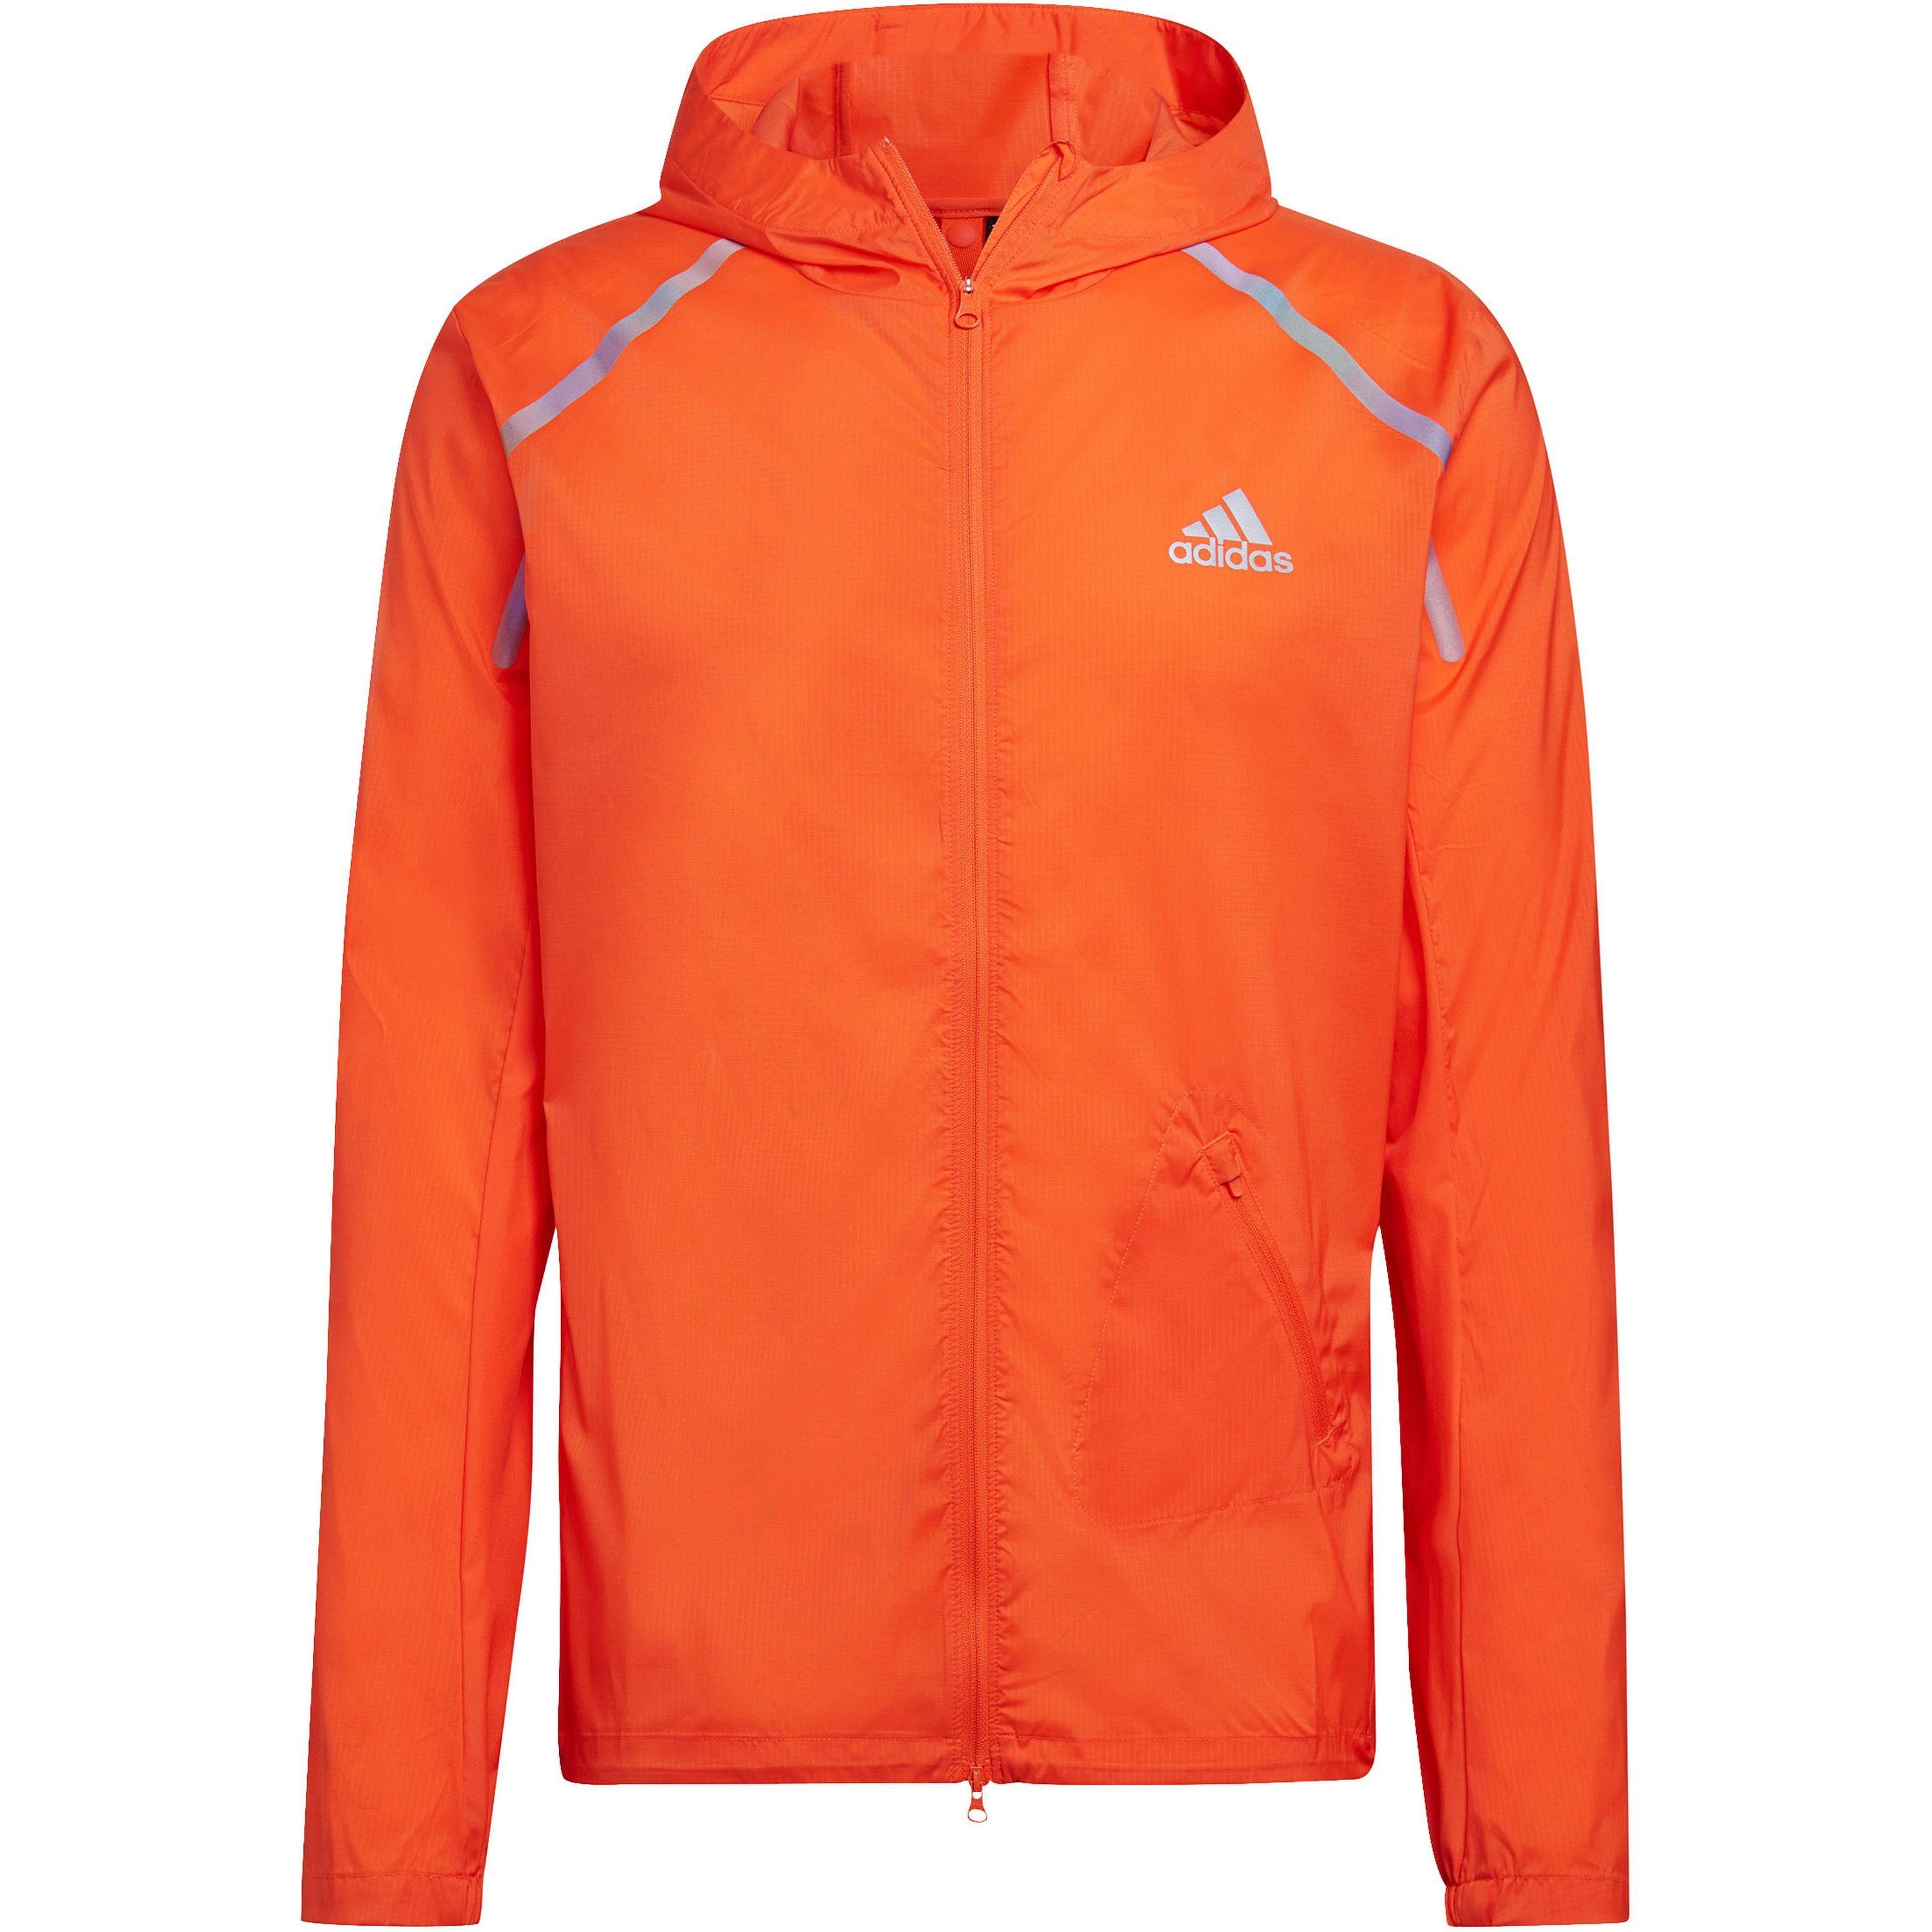 adidas Performance Laufjacke Marathon semi impact orange